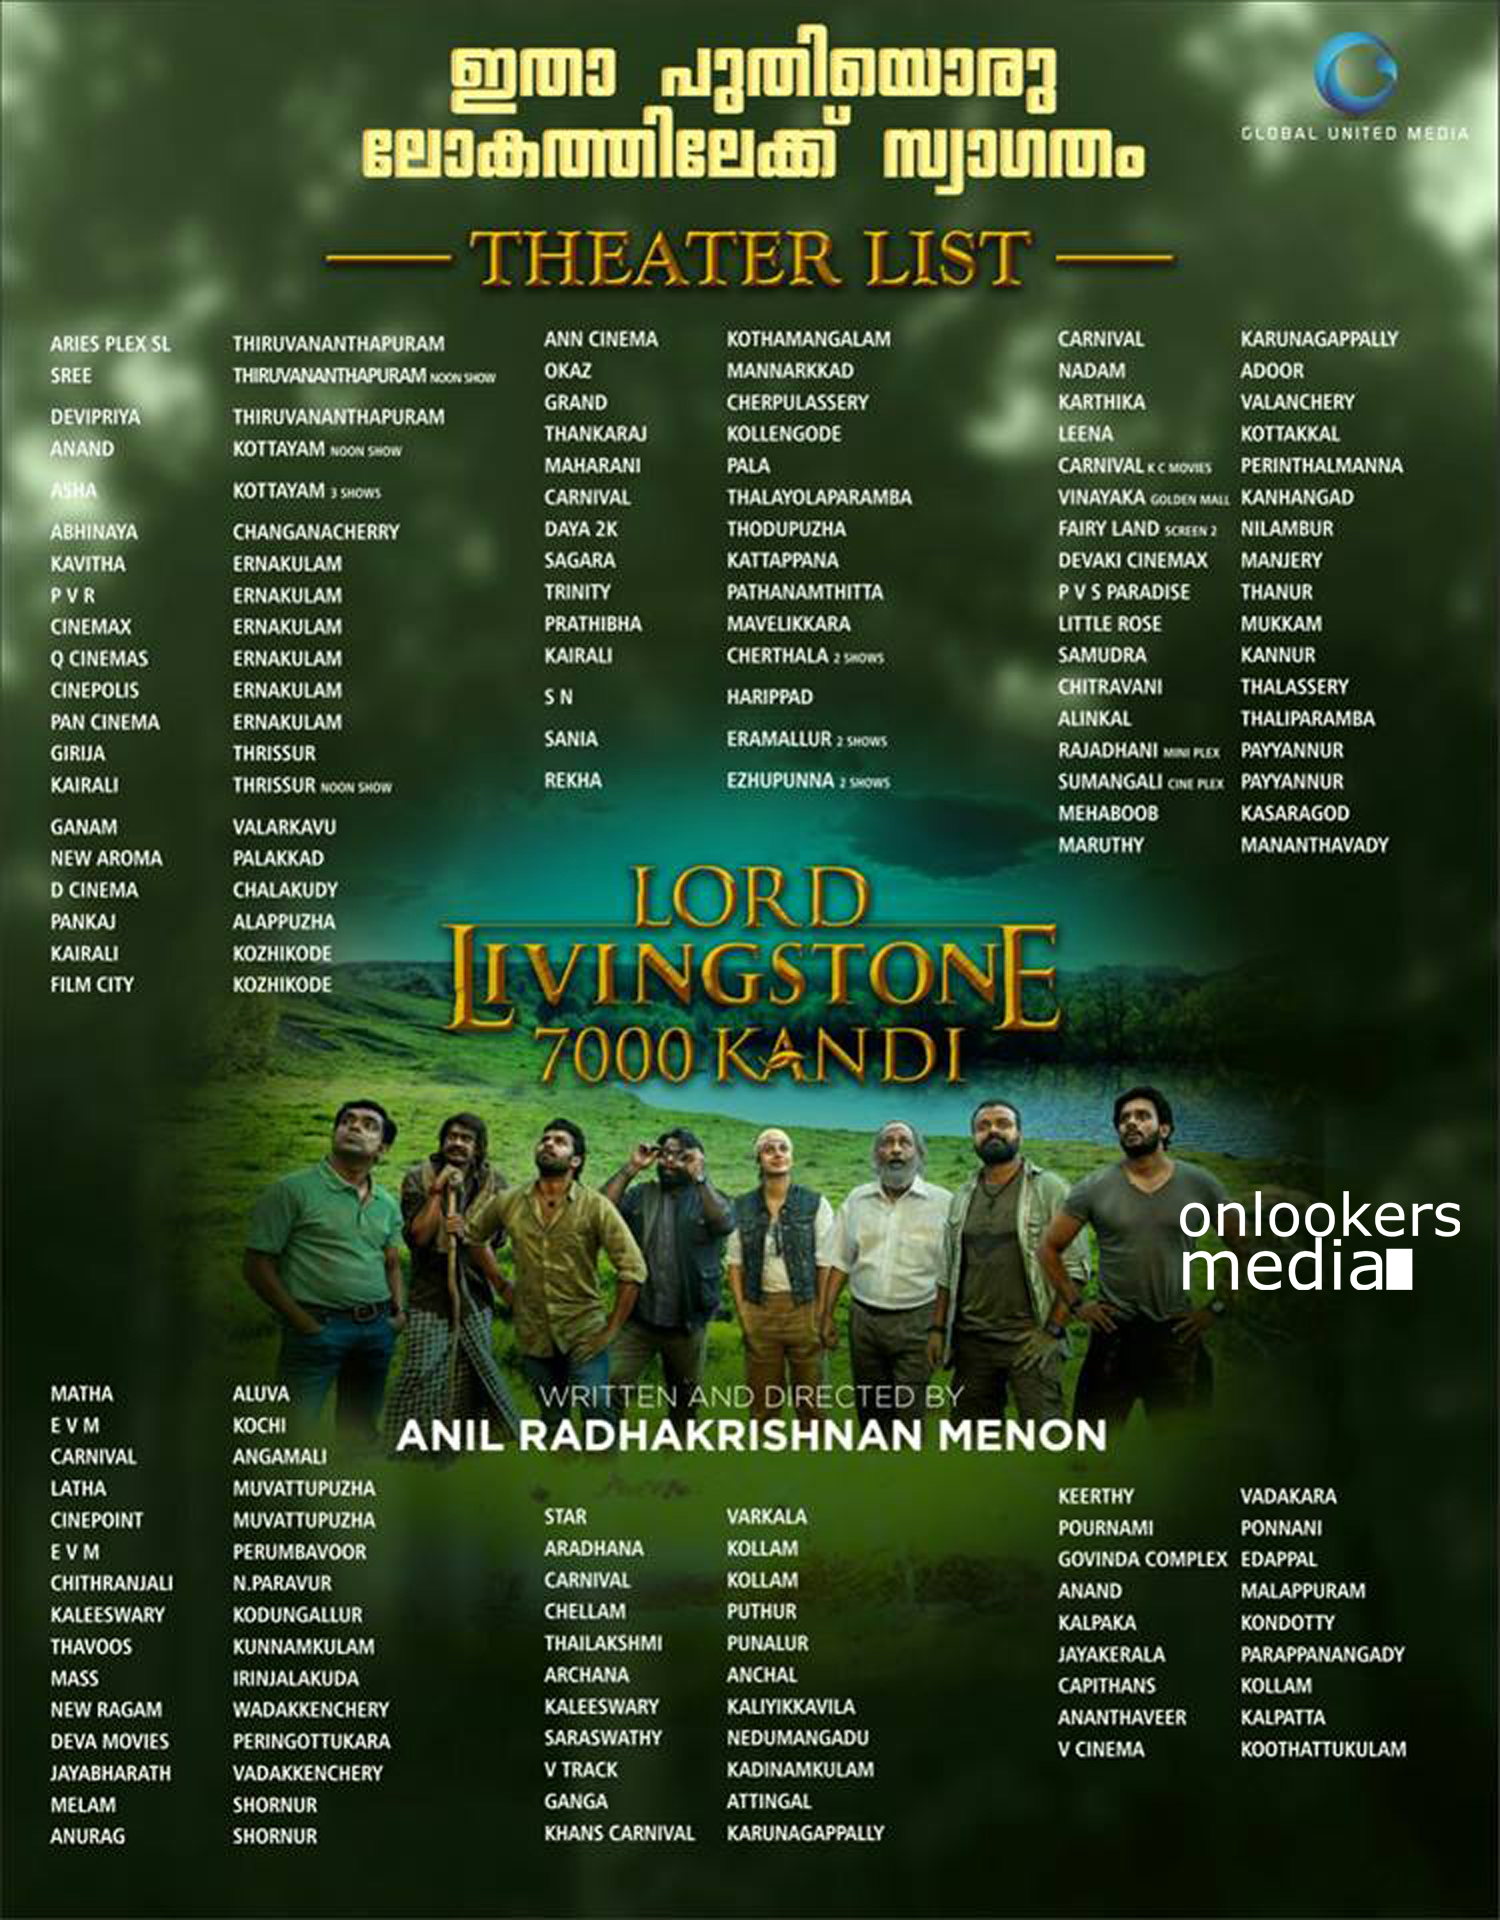 https://onlookersmedia.in/wp-content/uploads/2015/01/Lord-Livingstone-7000-Kandi-Theater-List.jpg